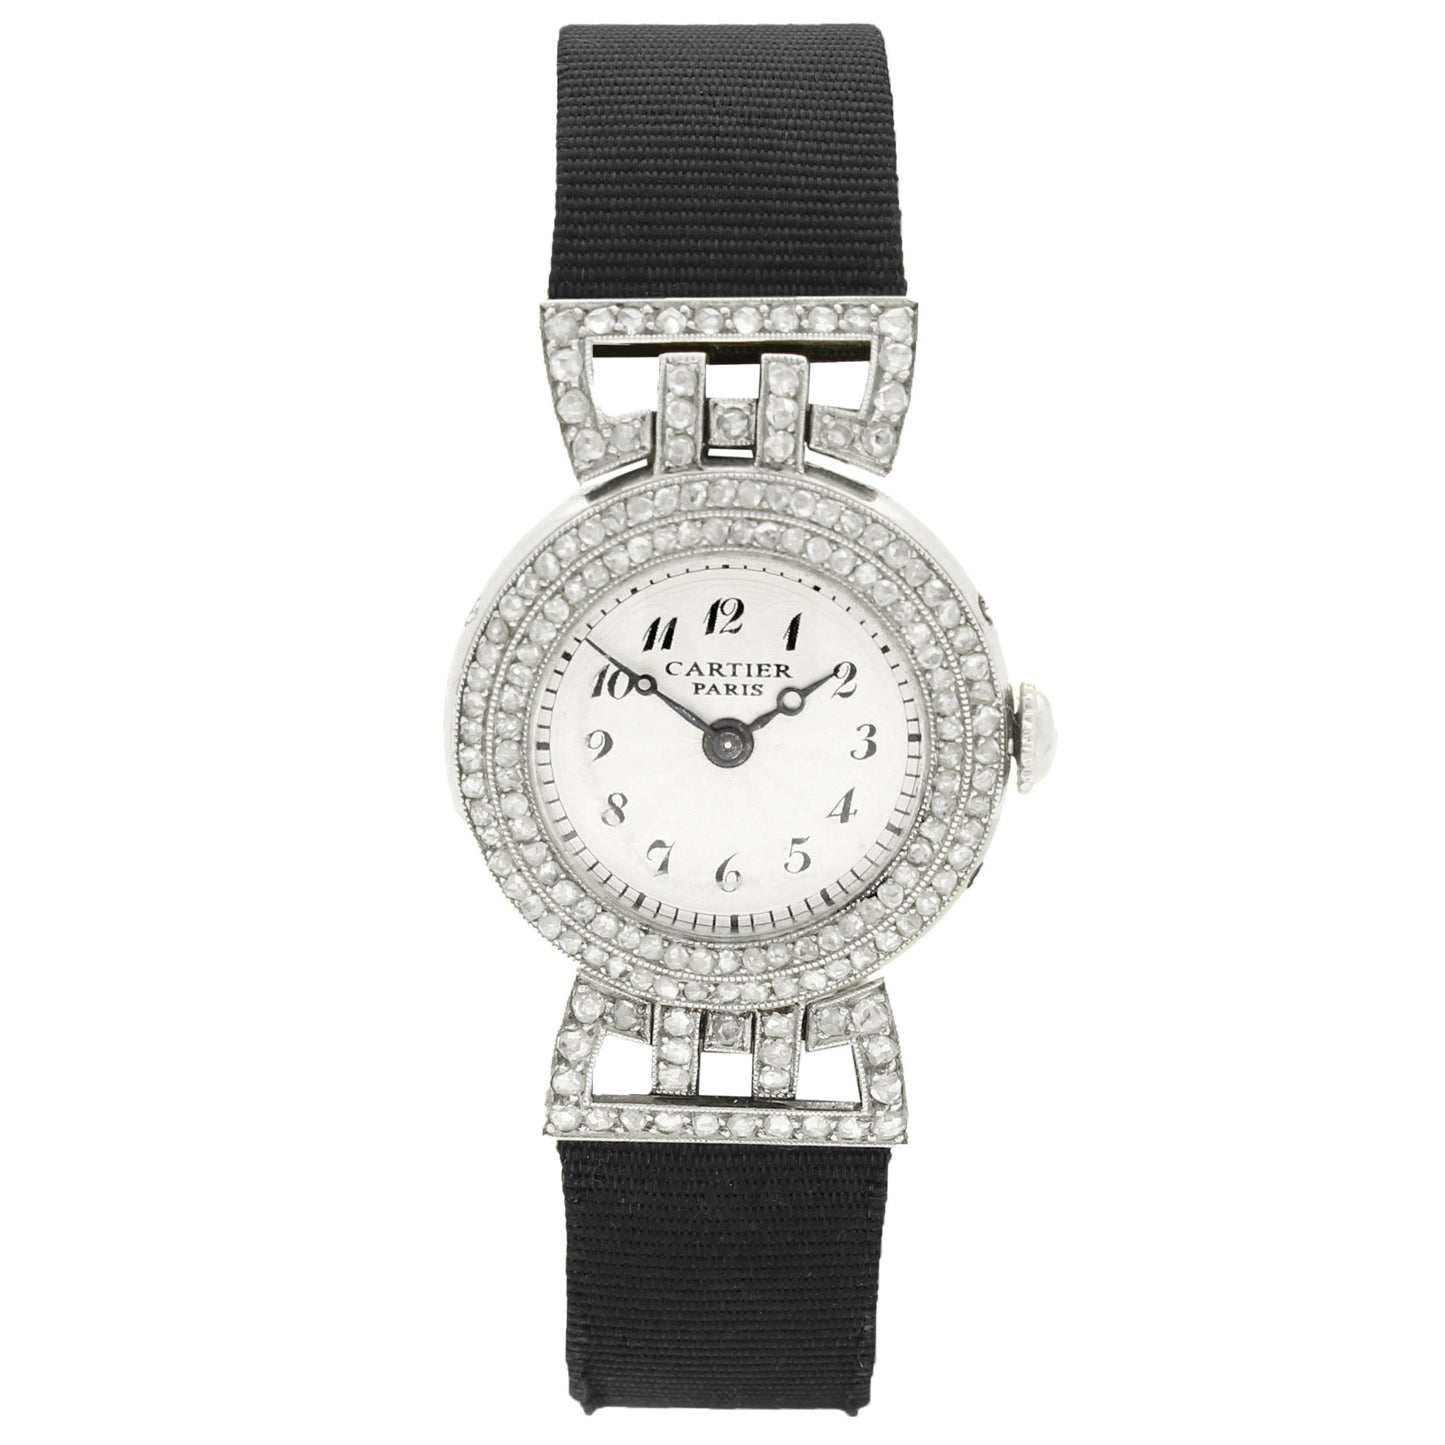 Platinum and diamond set wristwatch. Made 1920